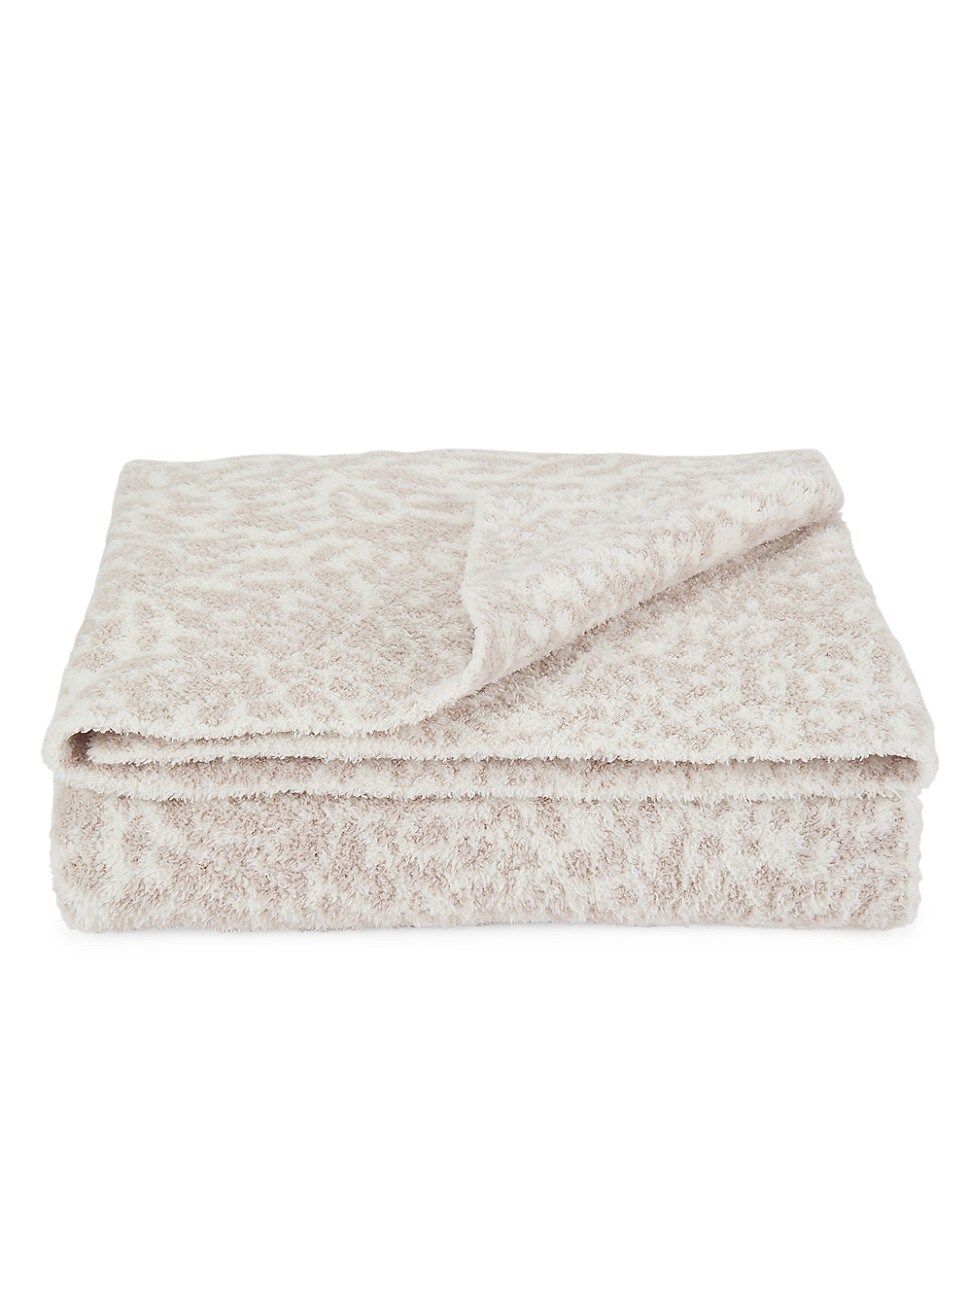 CozyChic Bloom Blanket - Cream Sand Dollar | Saks Fifth Avenue